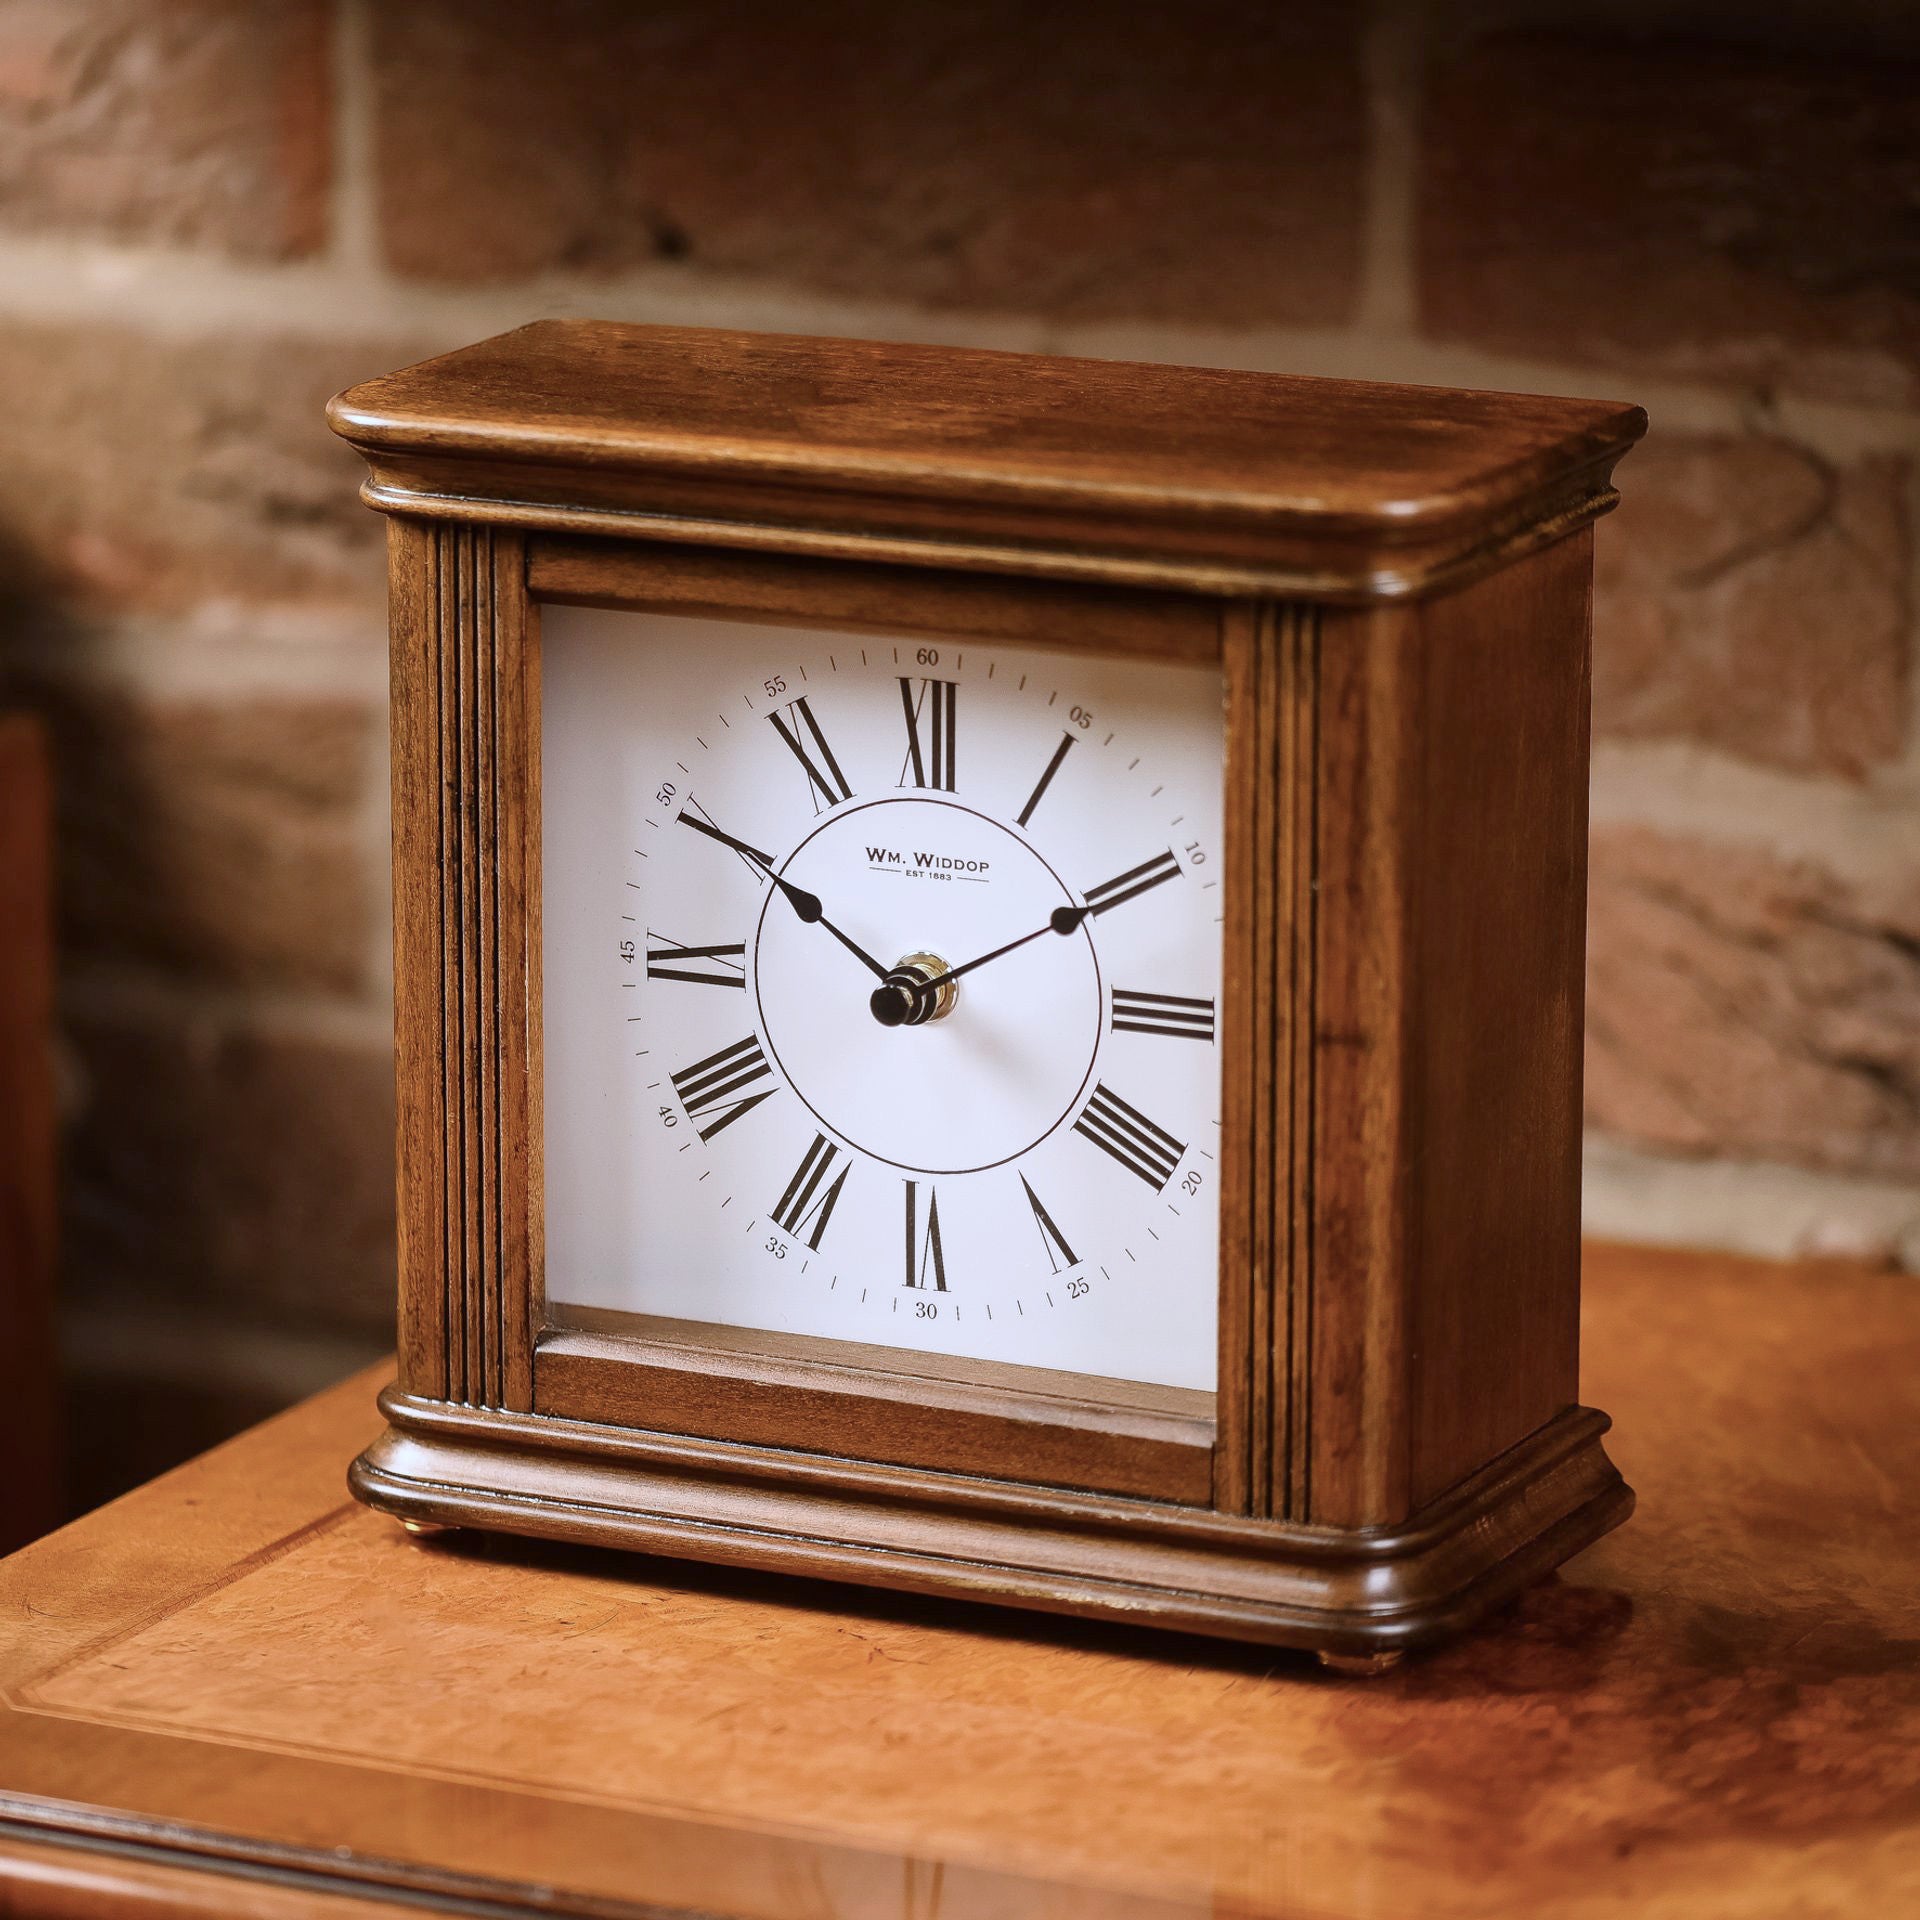 WM. Widdop Walnut Finish Mantel Clock - Westminster Chime